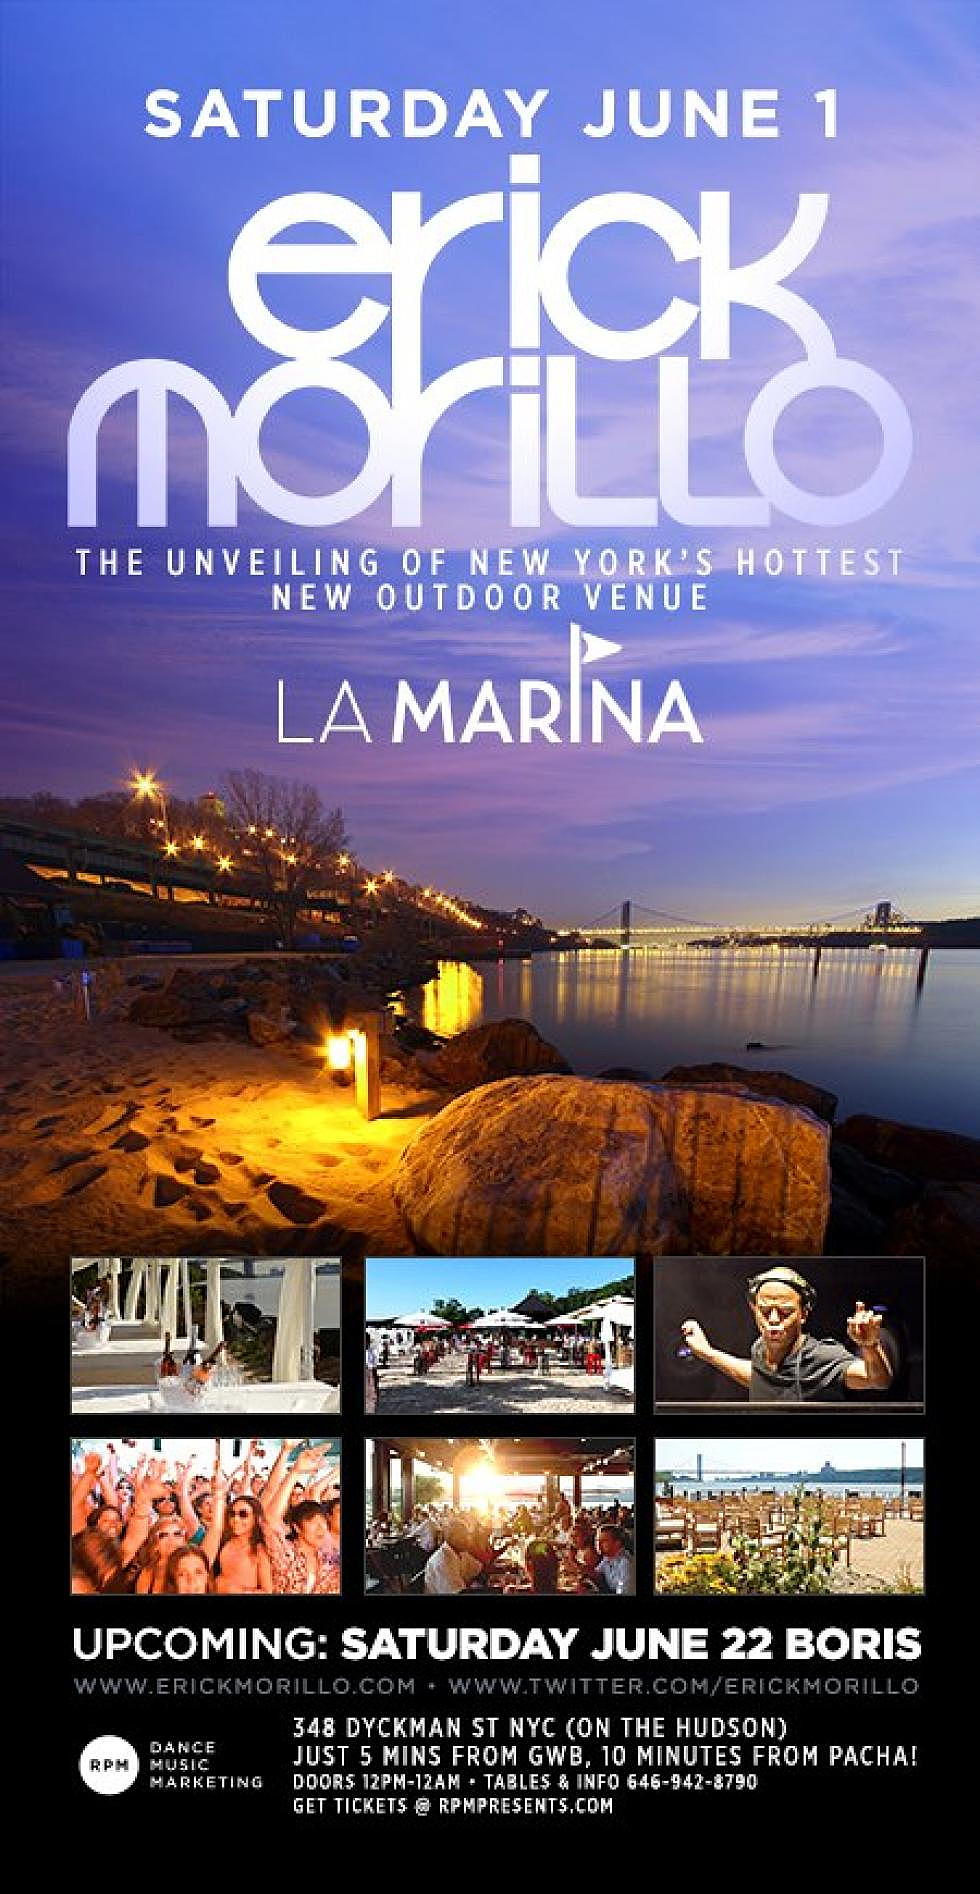 Pacha NYC to open new outdoor venue &#8220;La Marina&#8221;